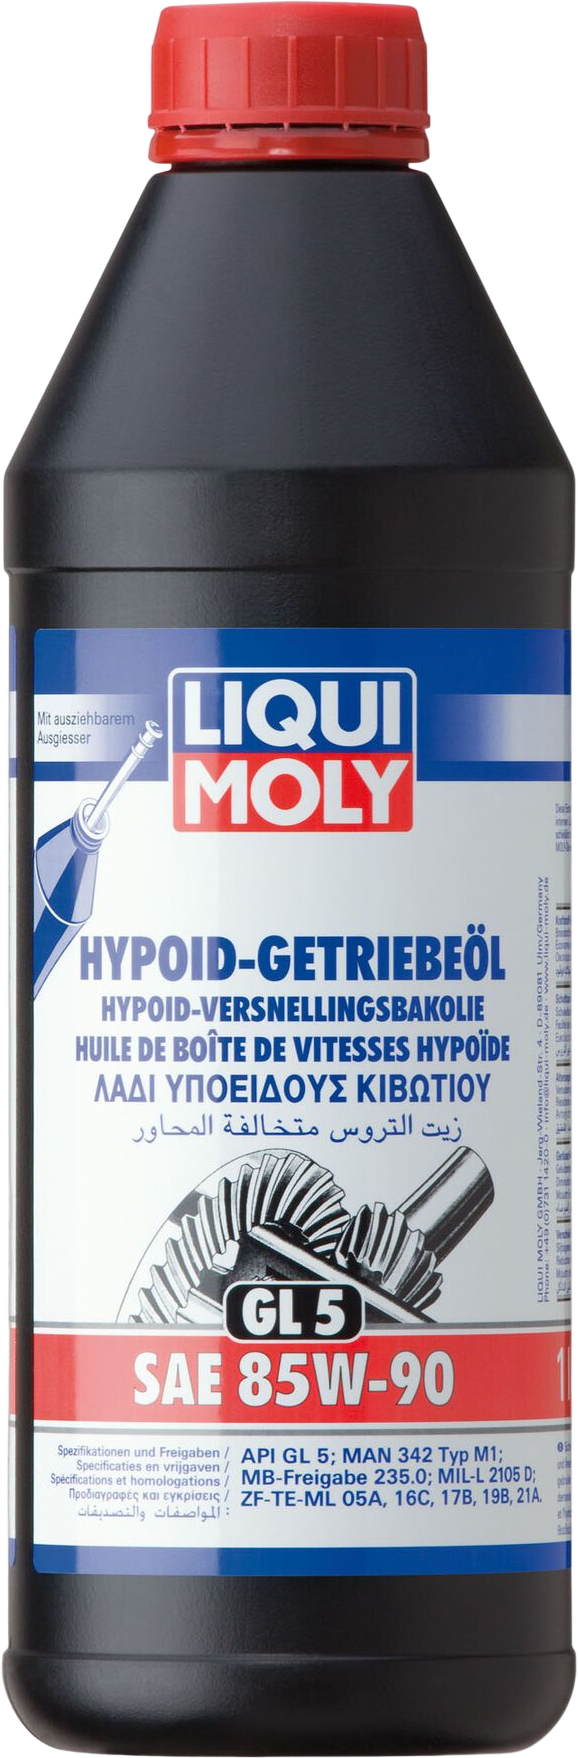 Liqui Moly Hypoïd-versnellingsbakolie (GL5) SAE 85W-90, 6 x 1 lt detail 2